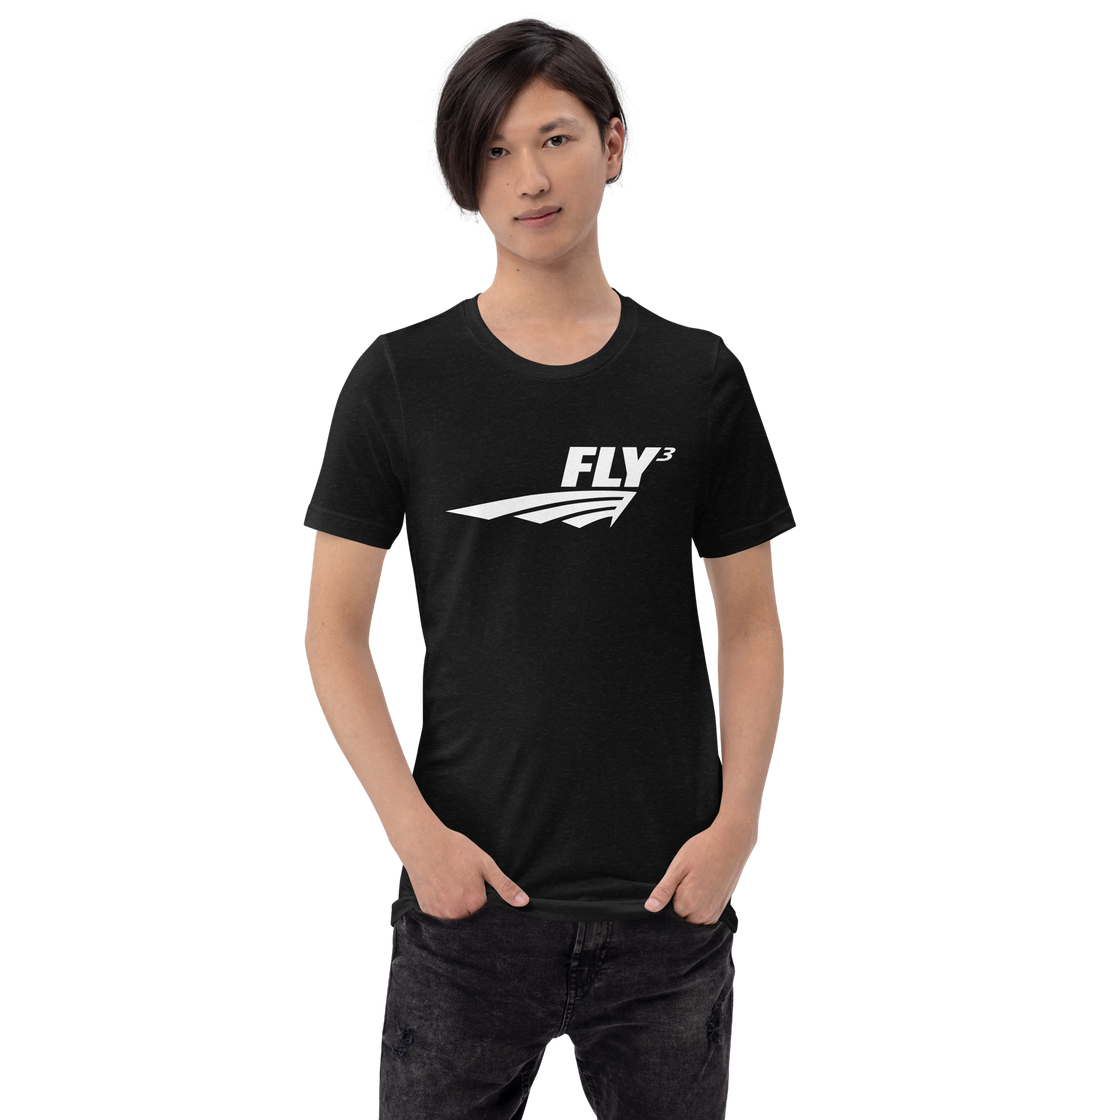 FLY³ Original Tee | Flycube